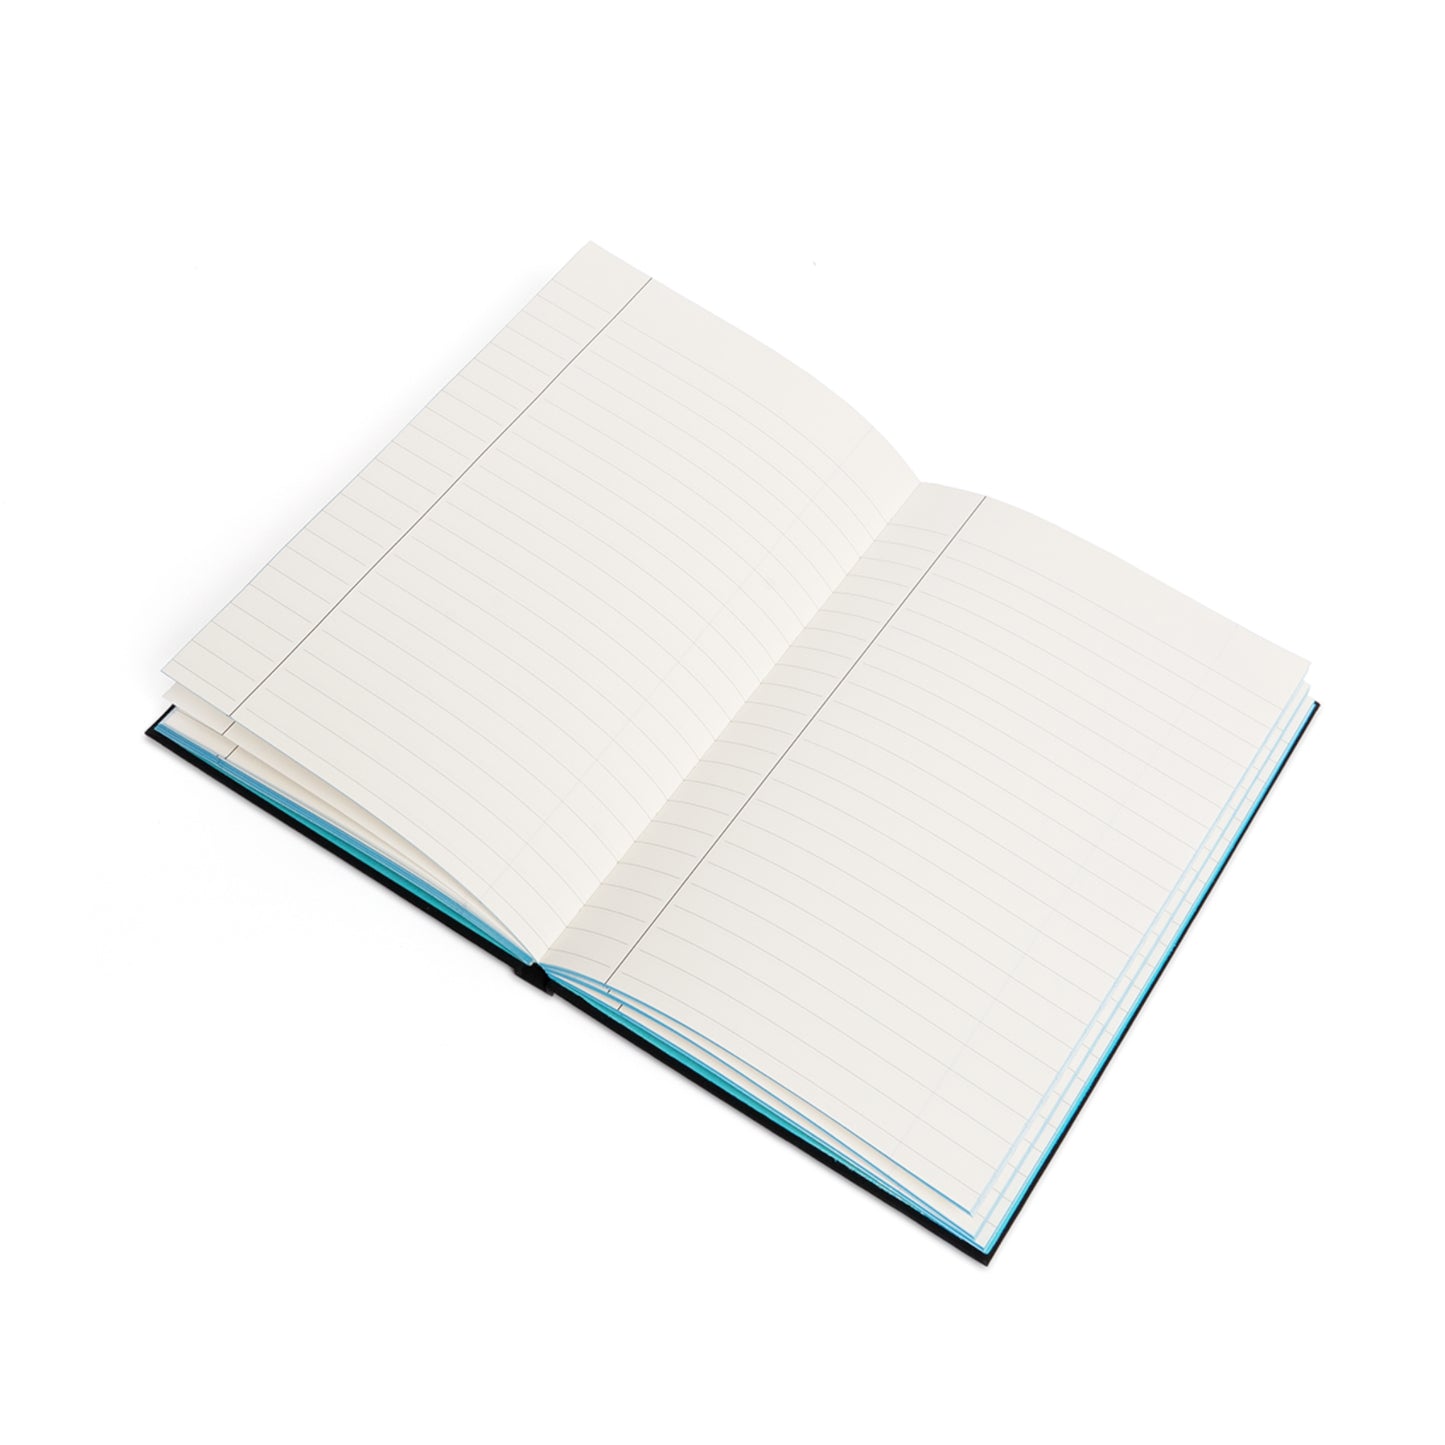 TheNamesBlü Writers Notebook - Ruled